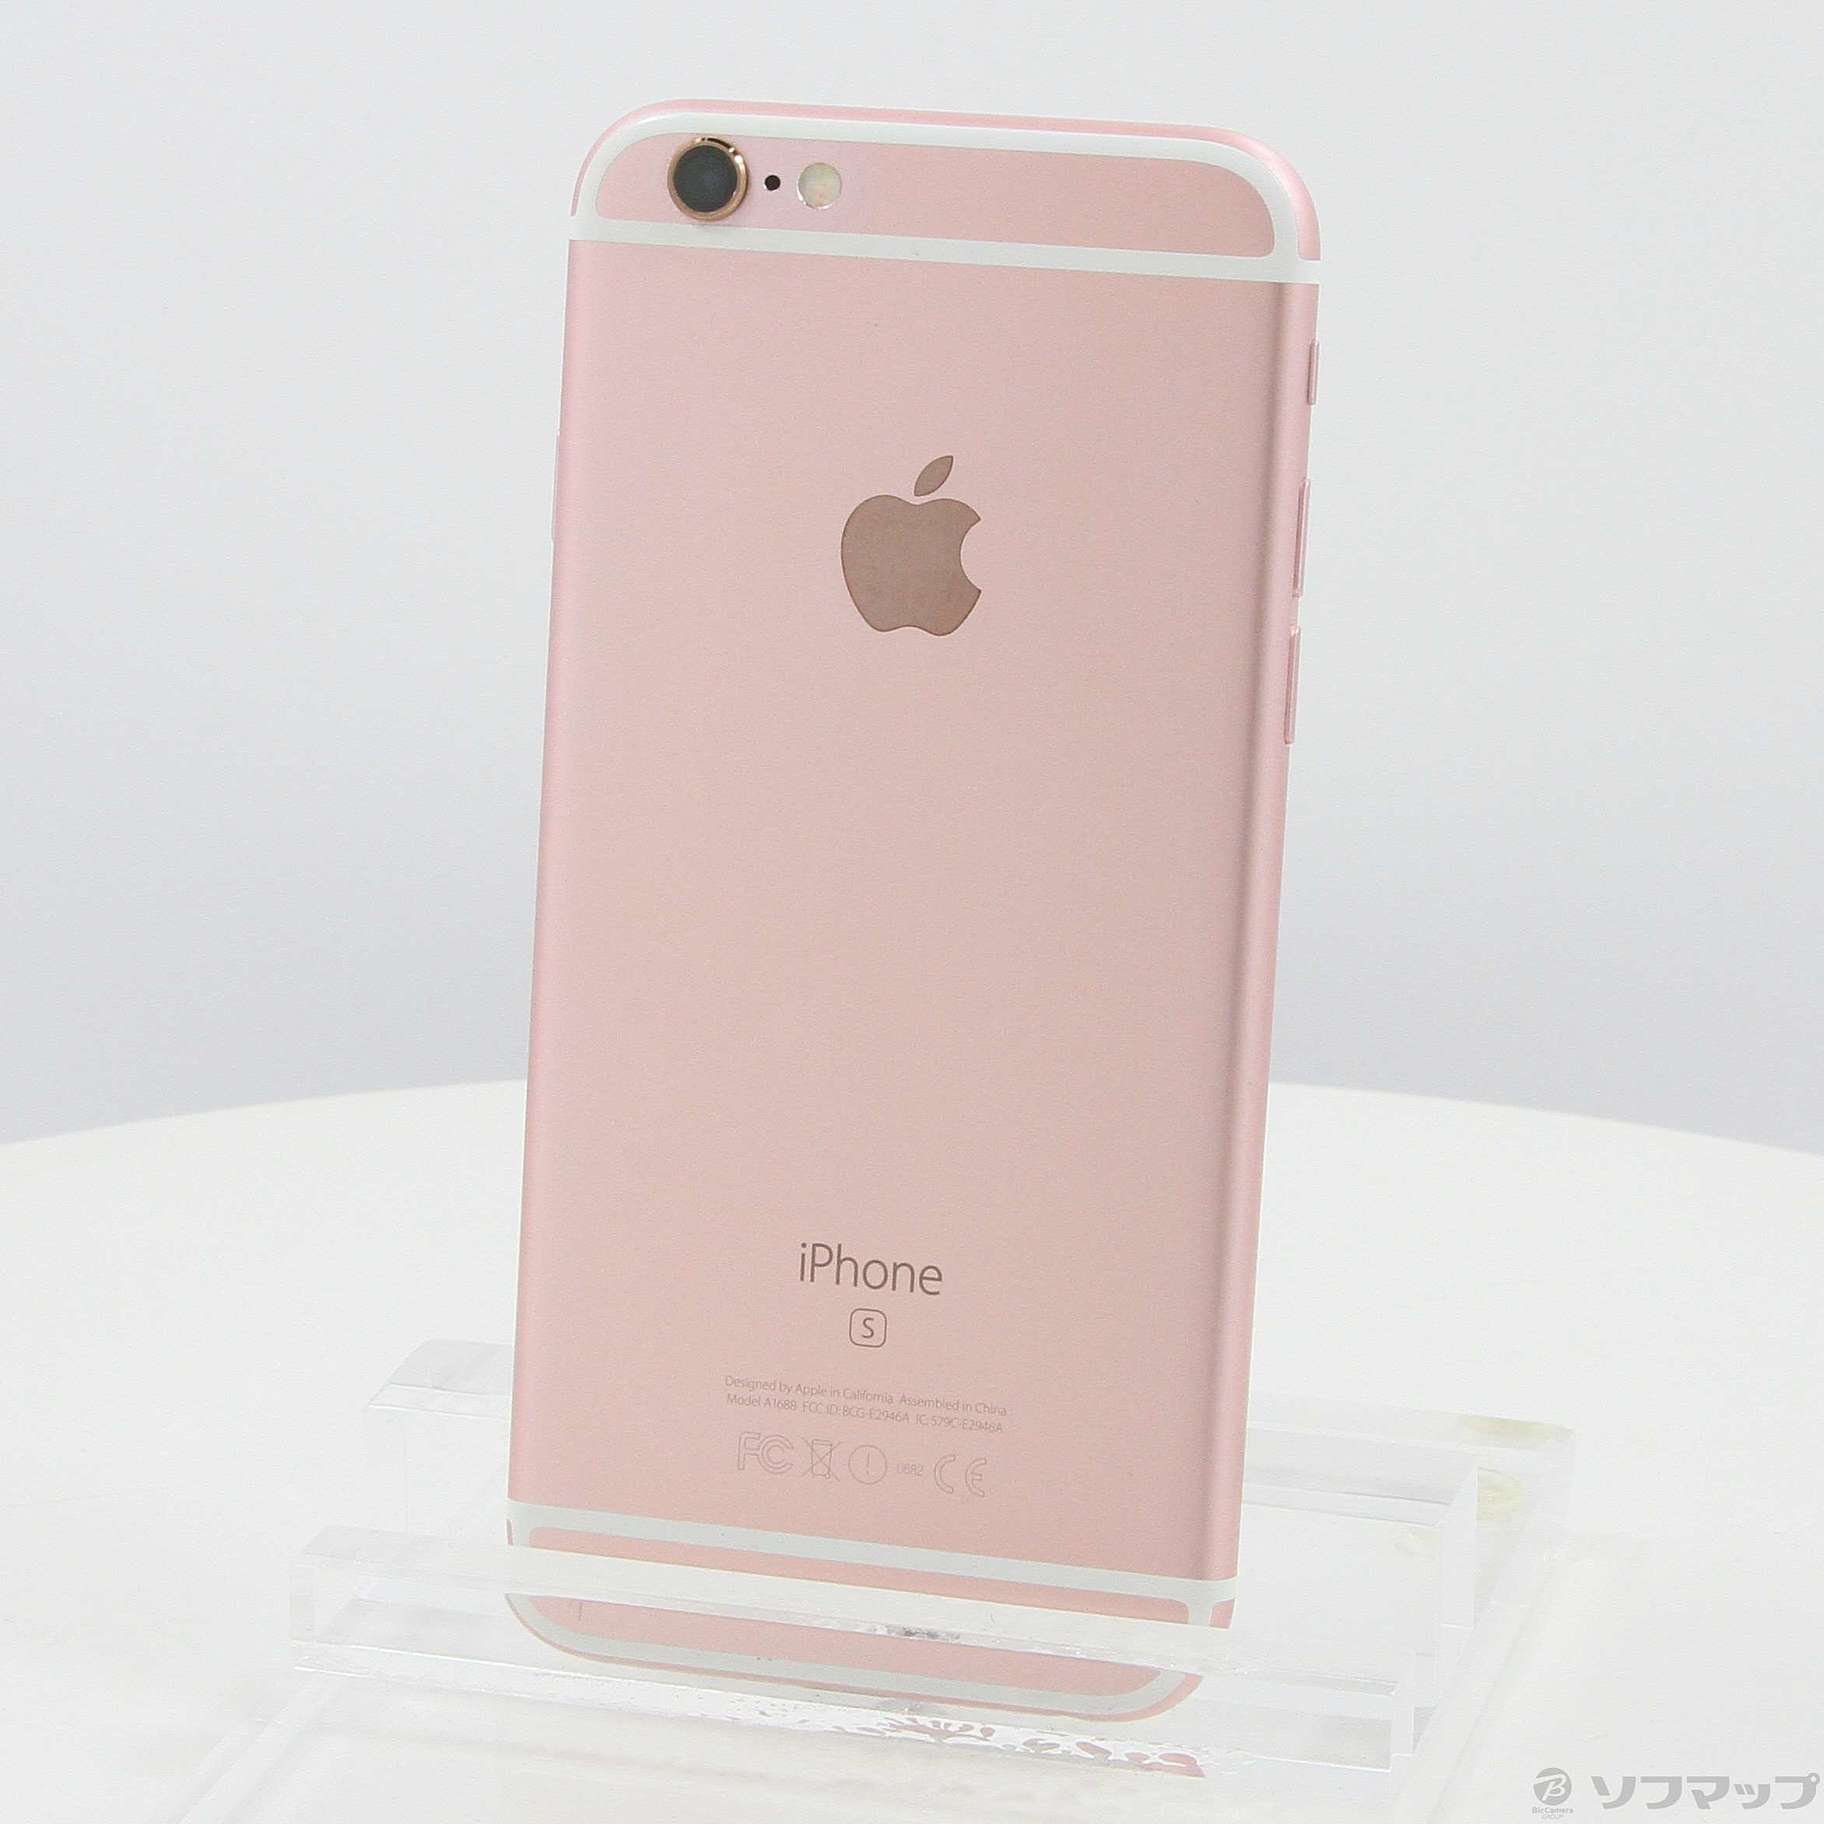 iPhone6s ローズゴールド 64GB ソフトバンクスマートフォン/携帯電話